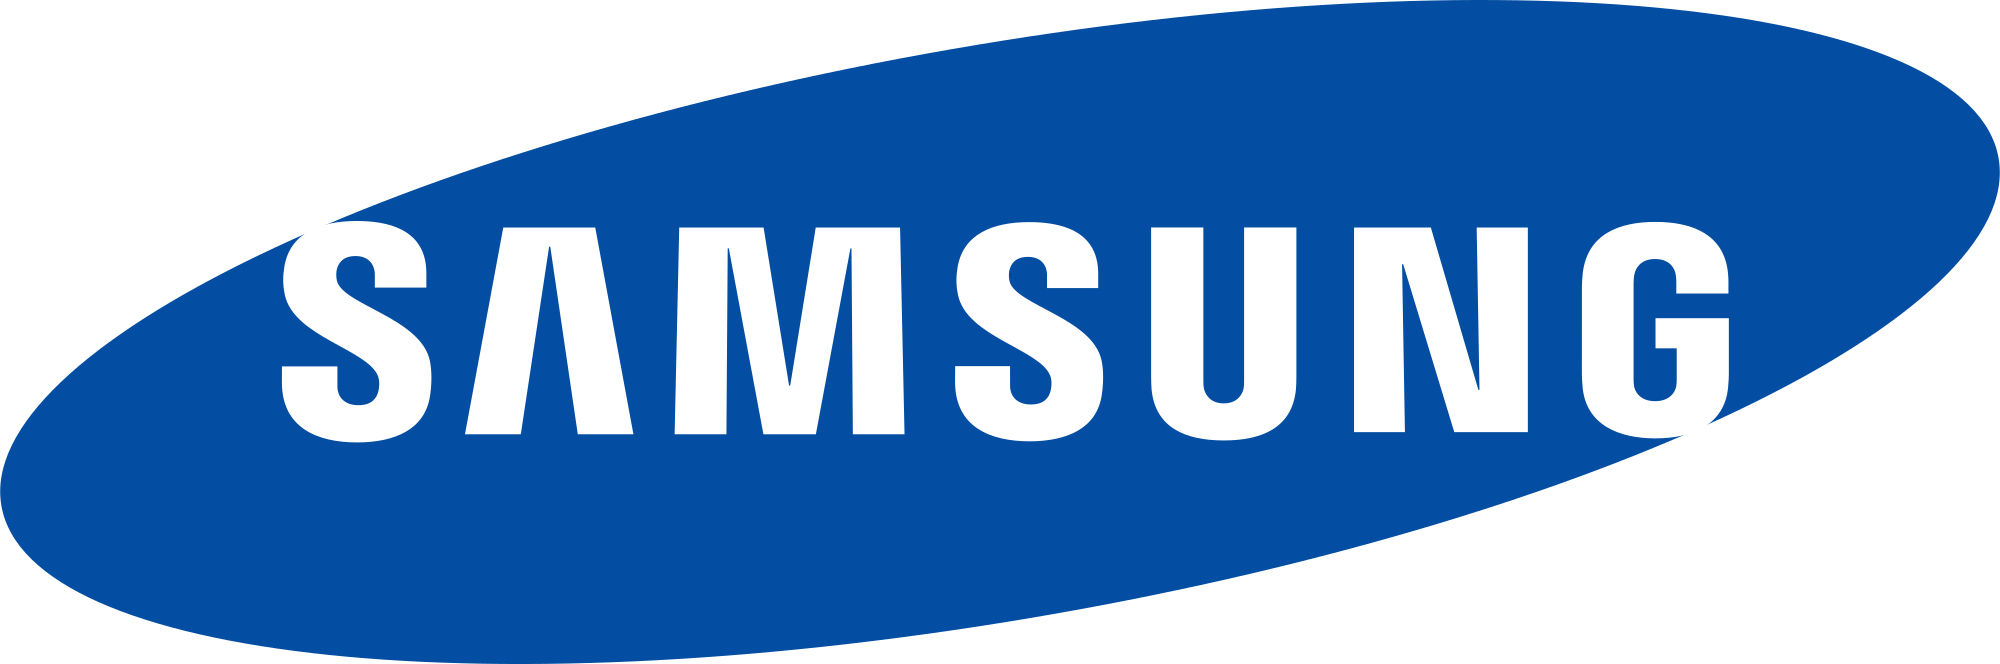 Samsung is preparing a new Galaxy A mid-ranger